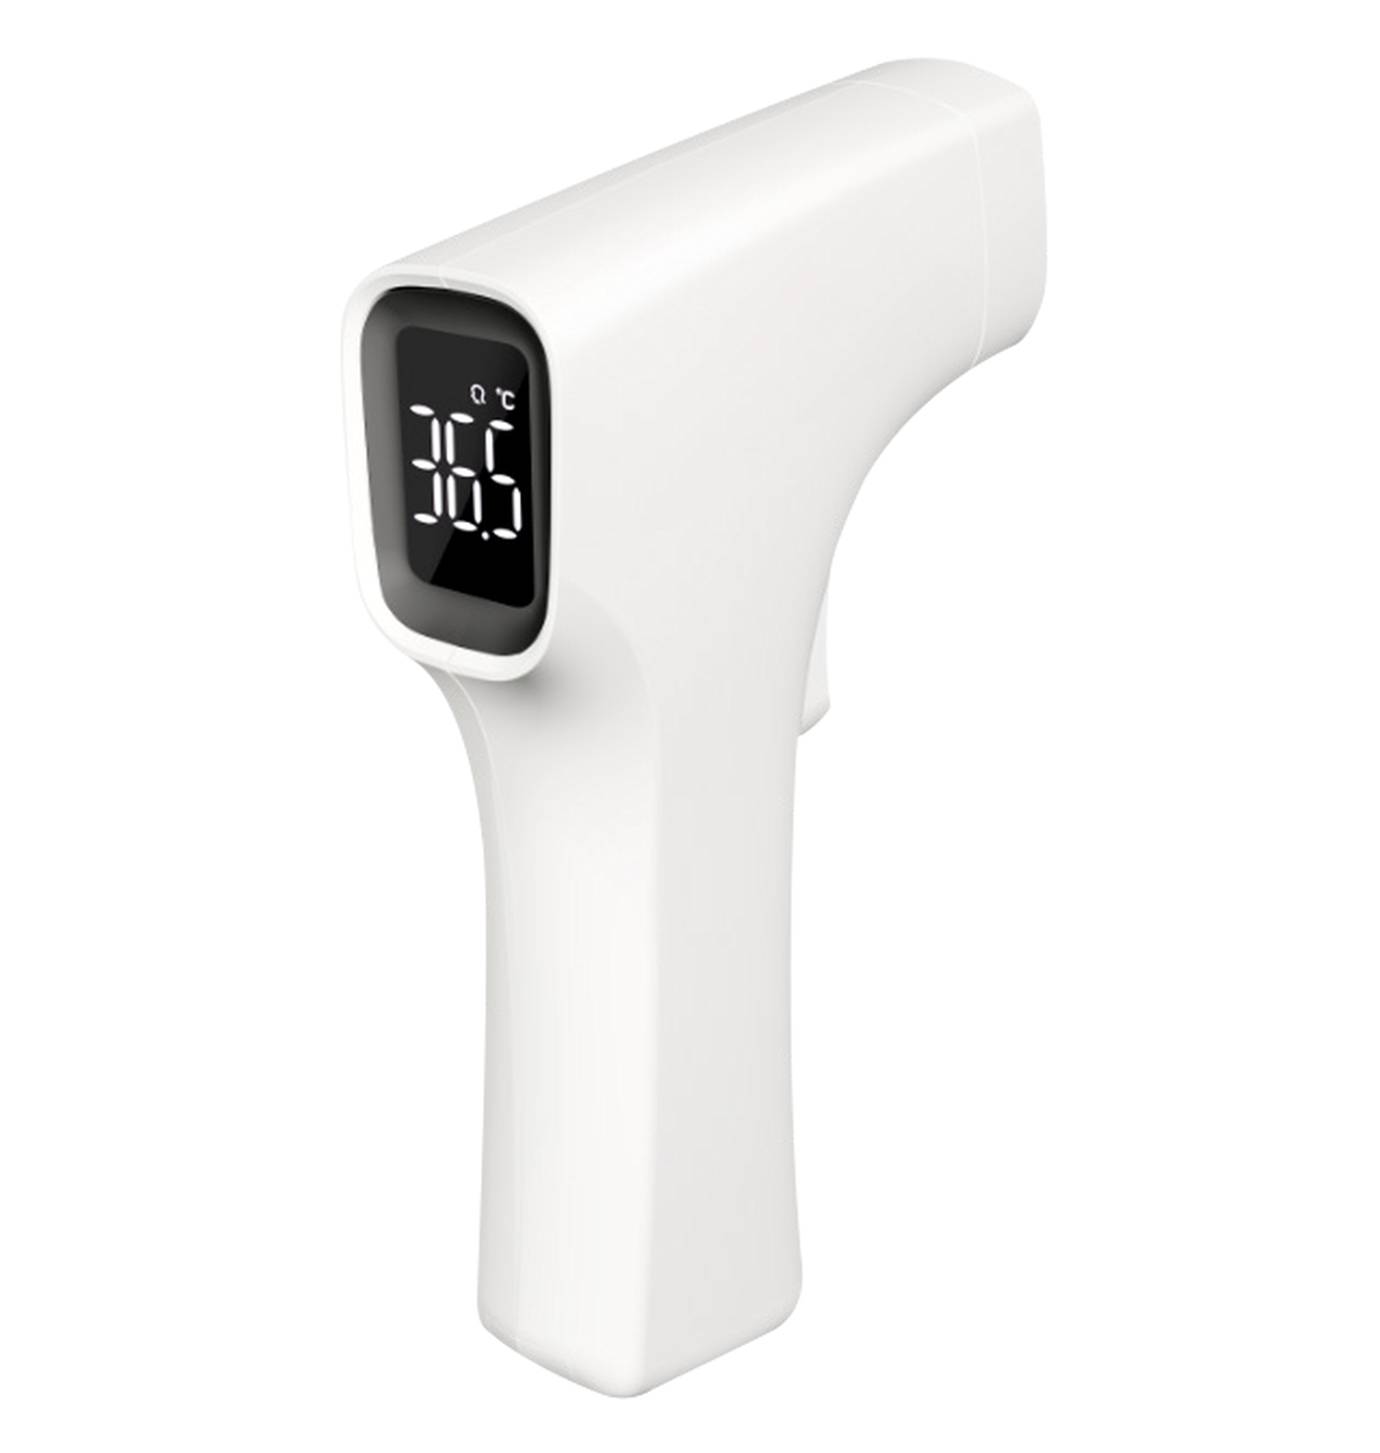 Thermomètre digital buccal Physiologic DiGiPro avec écran ACL.